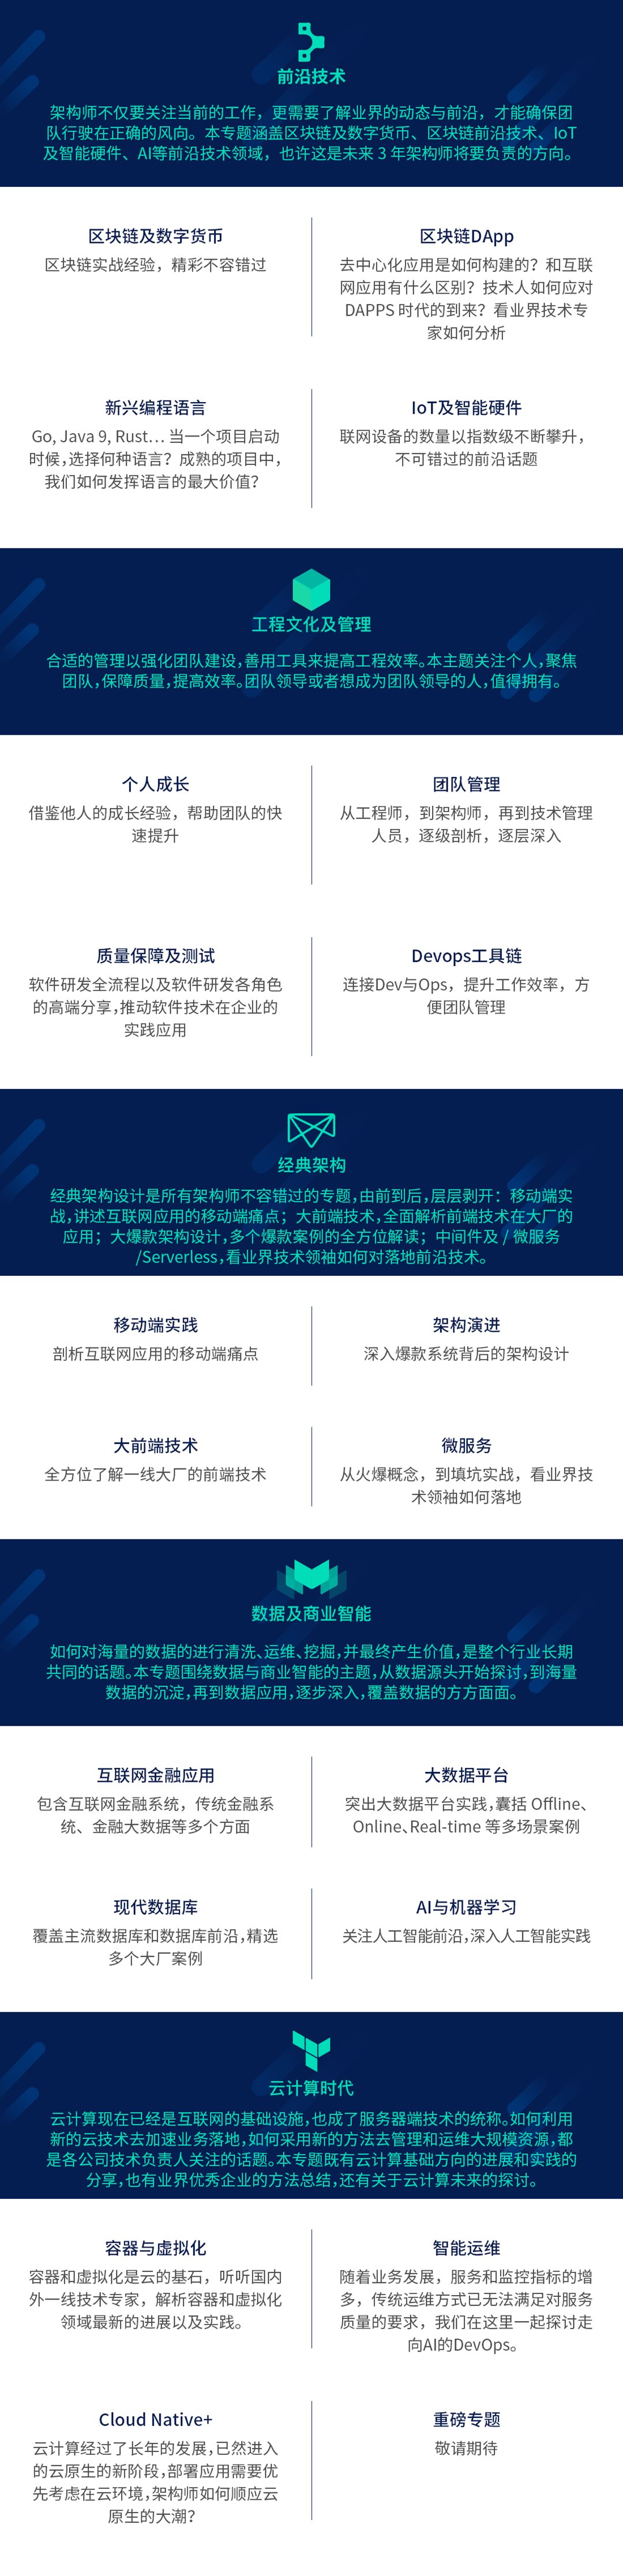 GIAC 2018全球互联网架构大会上海站